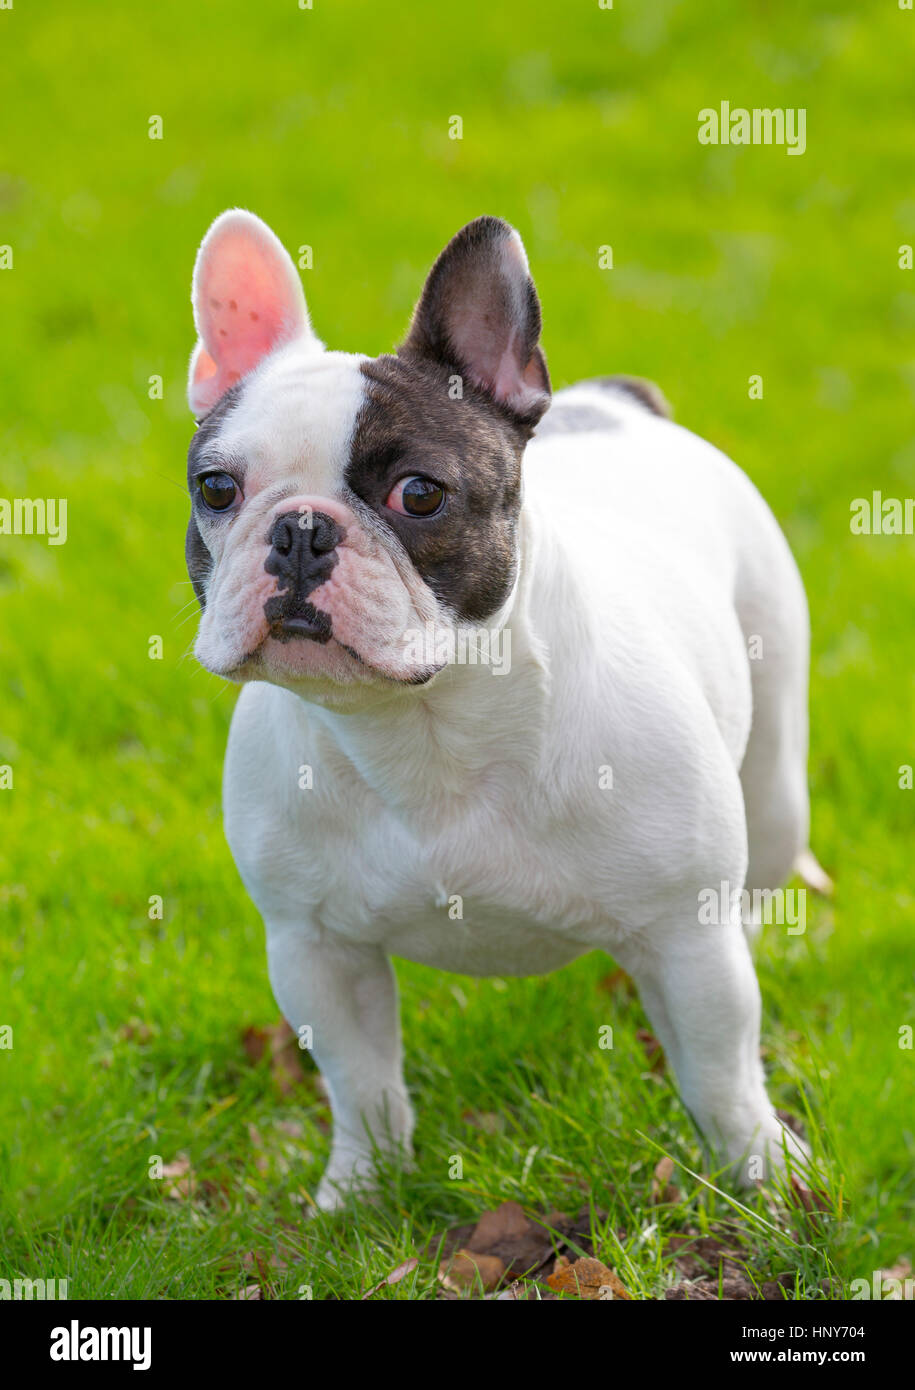 French Bulldog portrait in garden Stock Photo - Alamy